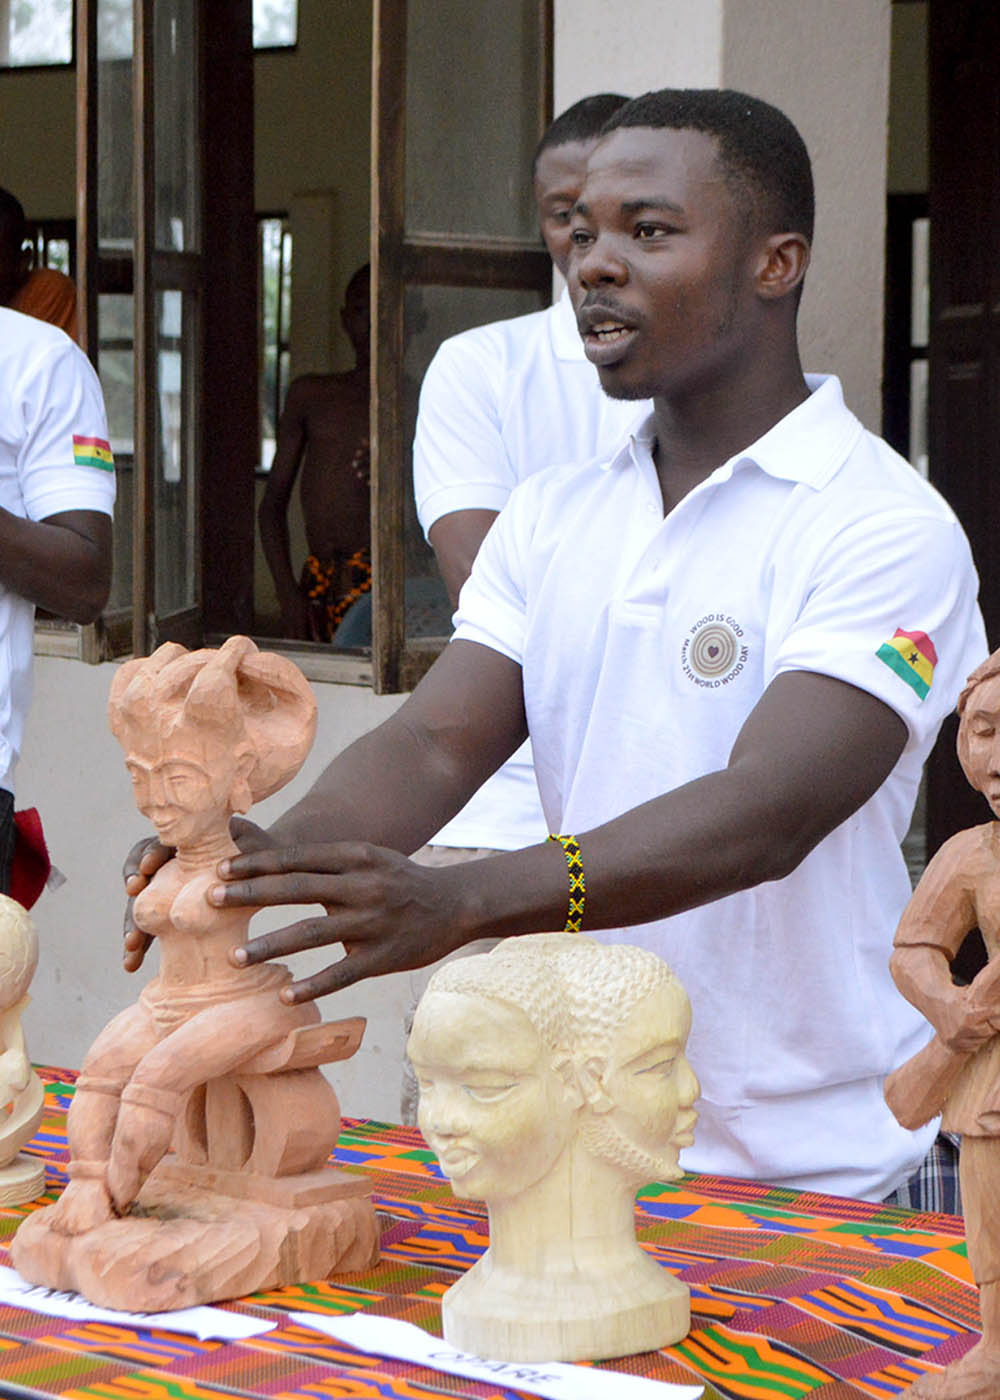 2015 WWD, regional event, woodcarving, Ghana